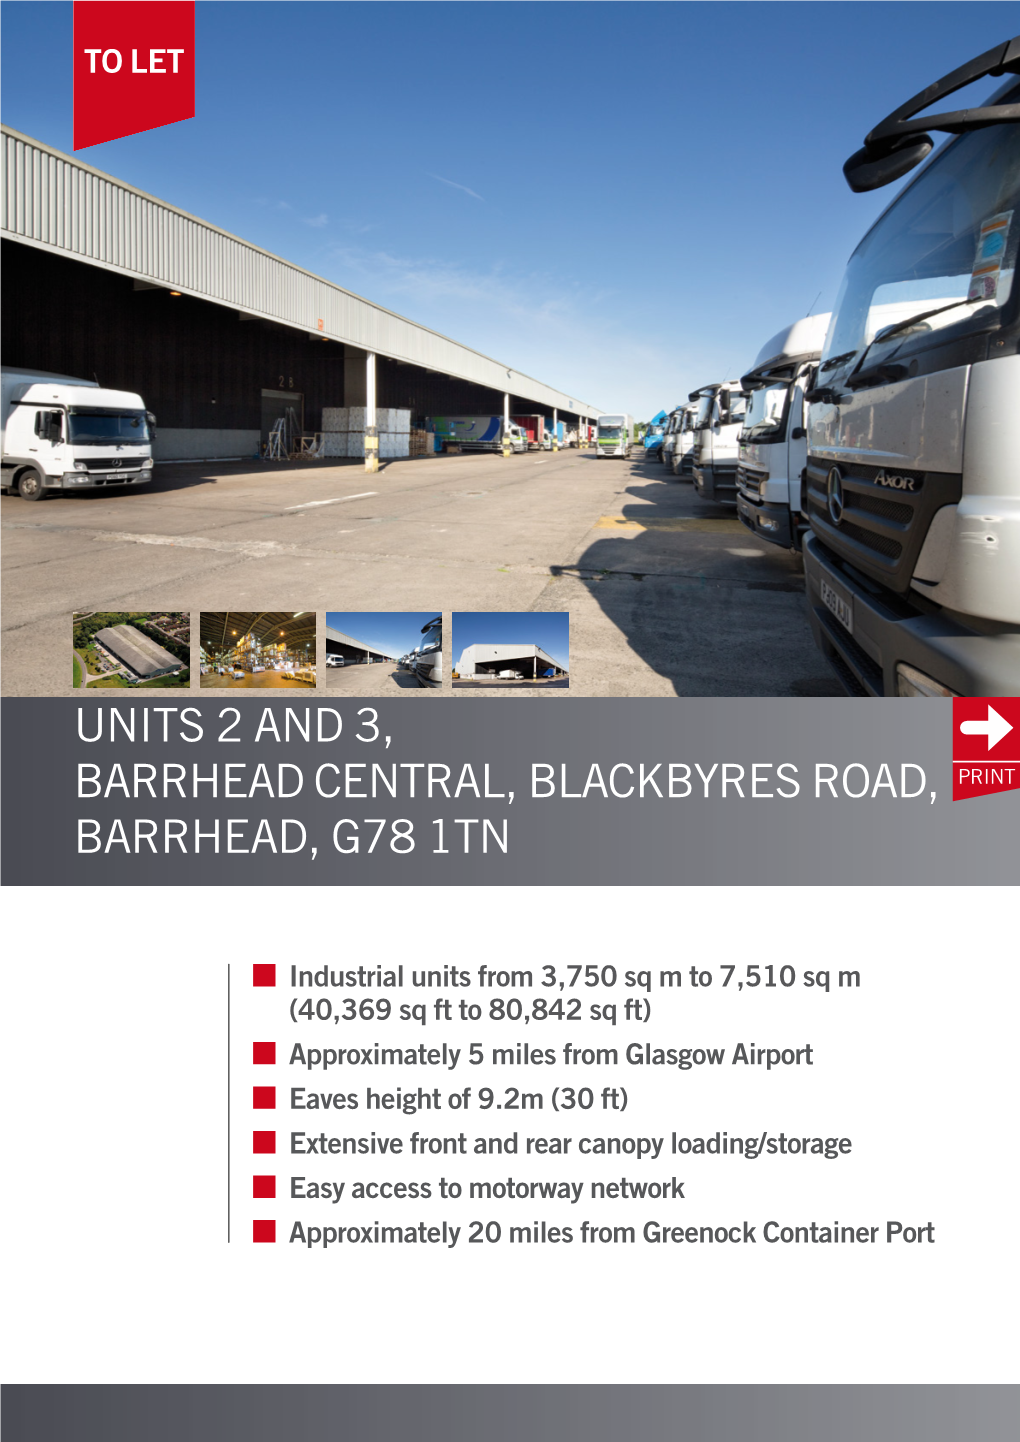 Units 2 and 3, Barrhead Central, Blackbyres Road, Print Barrhead, G78 1Tn